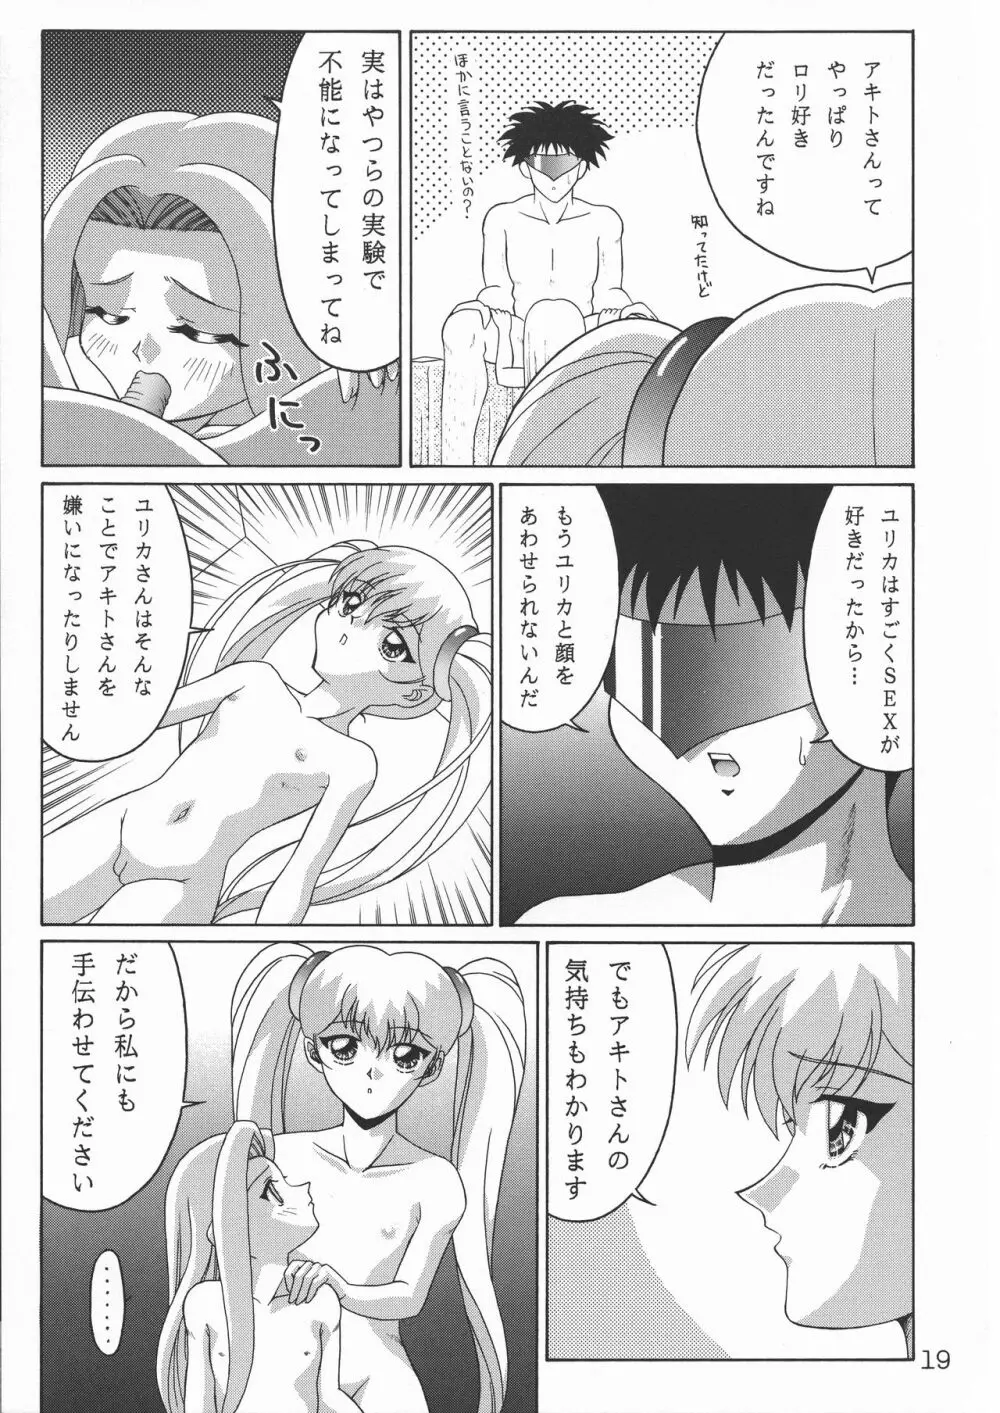 TOKUTEI 9 - page19